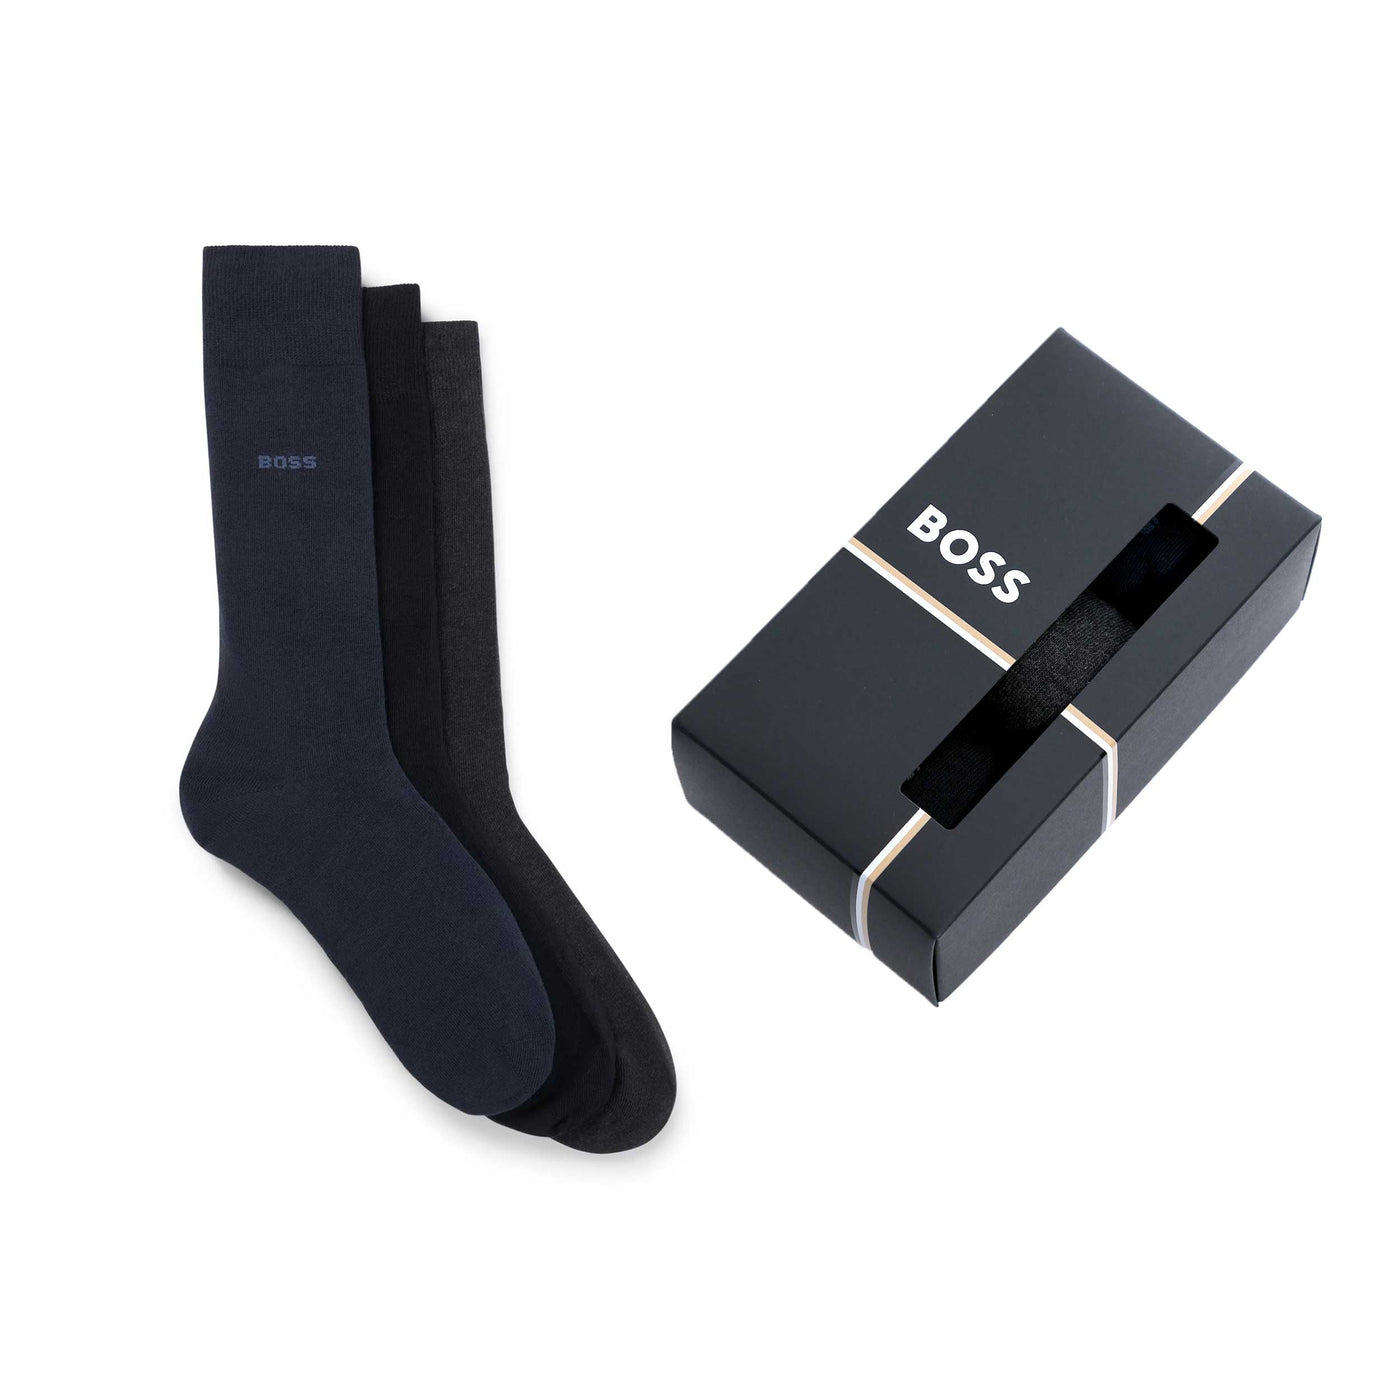 BOSS 3P RS Gift Set Uni CC Sock in Black, Grey & Navy